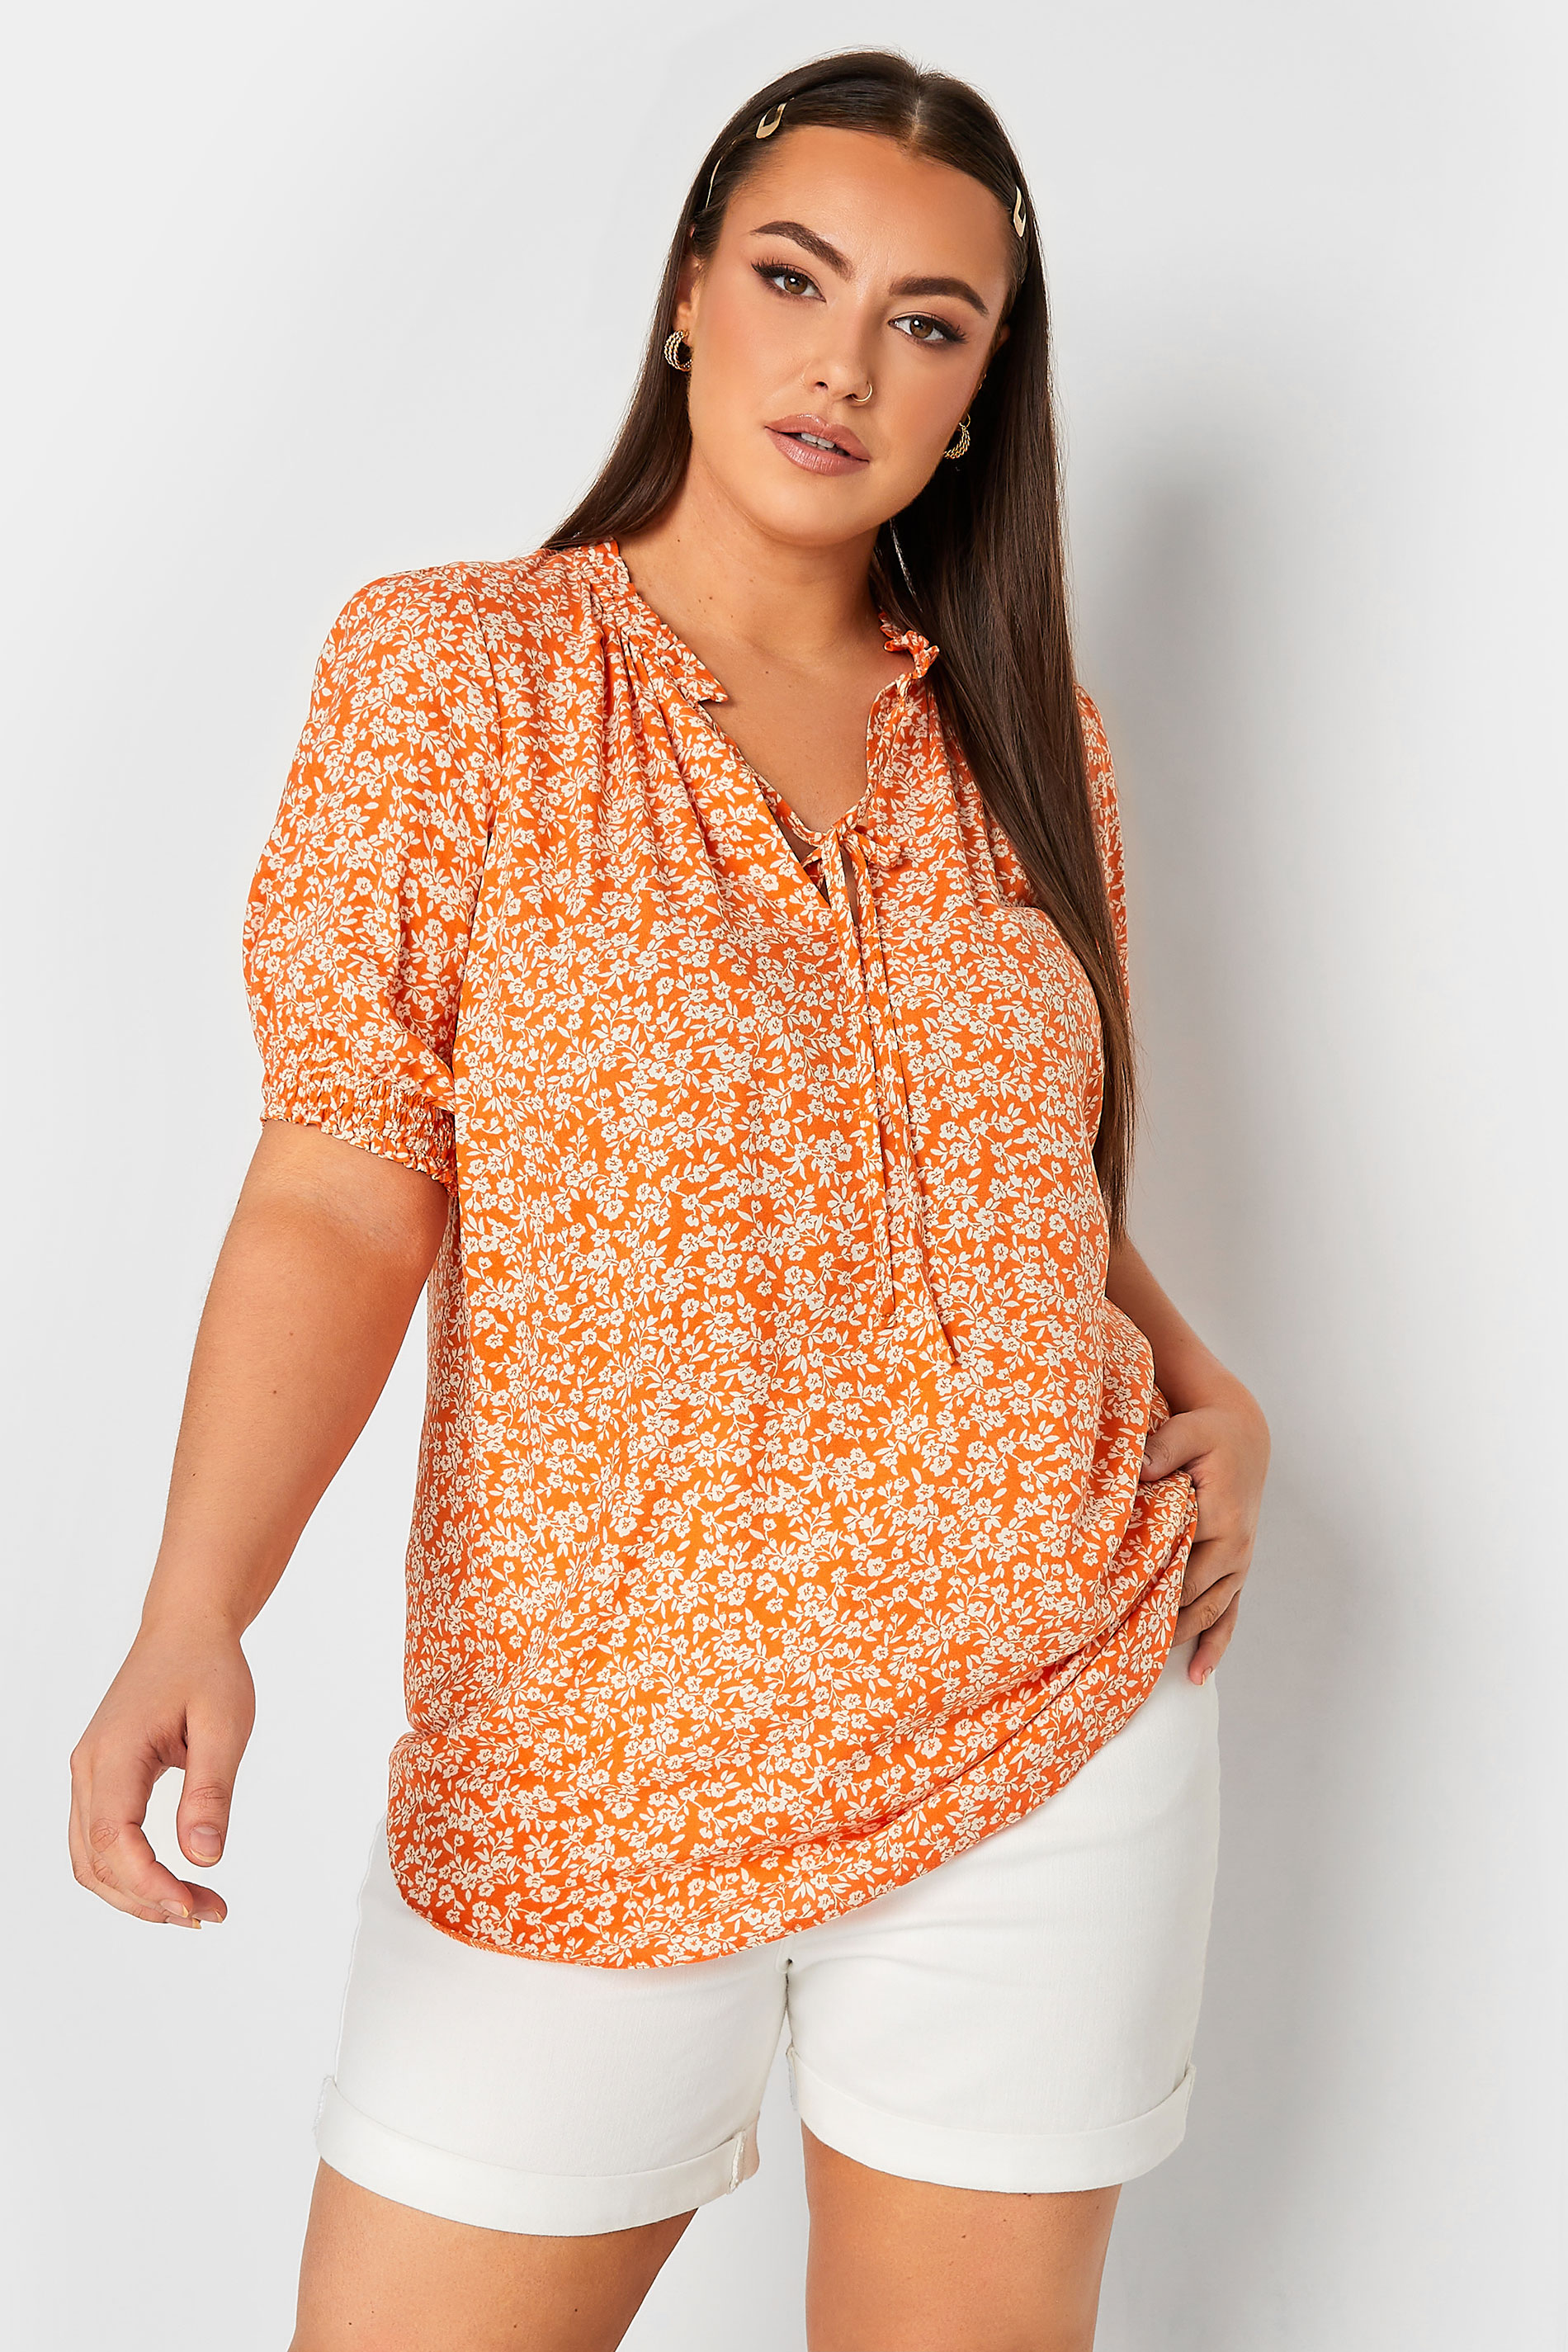 YOURS Plus Size Orange Floral Print Tie Neck Blouse | Yours Clothing 1